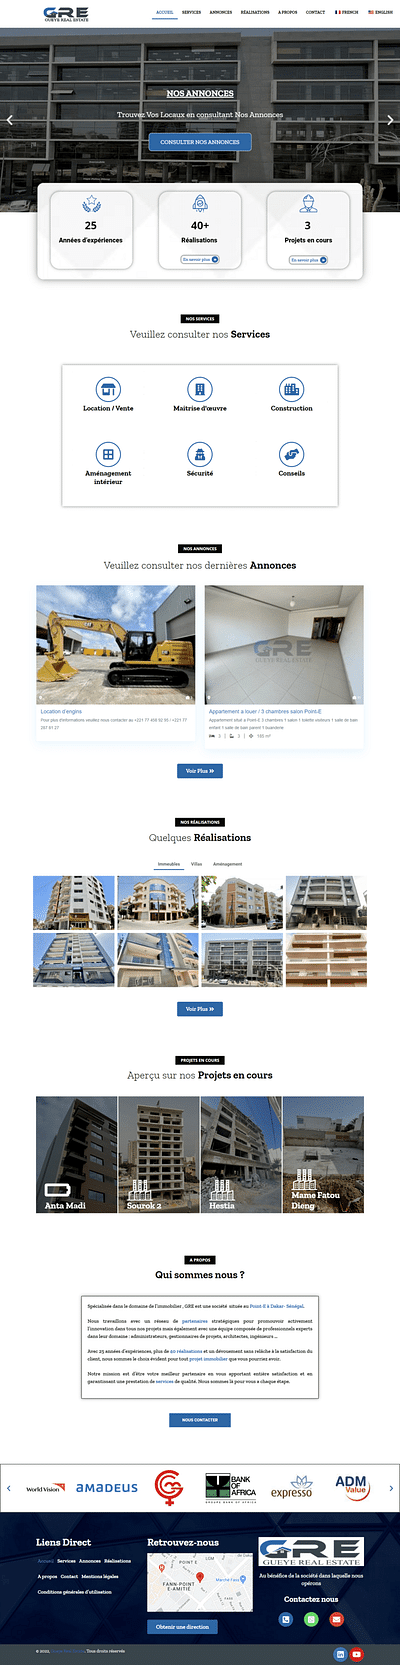 Création du site web Gueye Real Estate - Webseitengestaltung